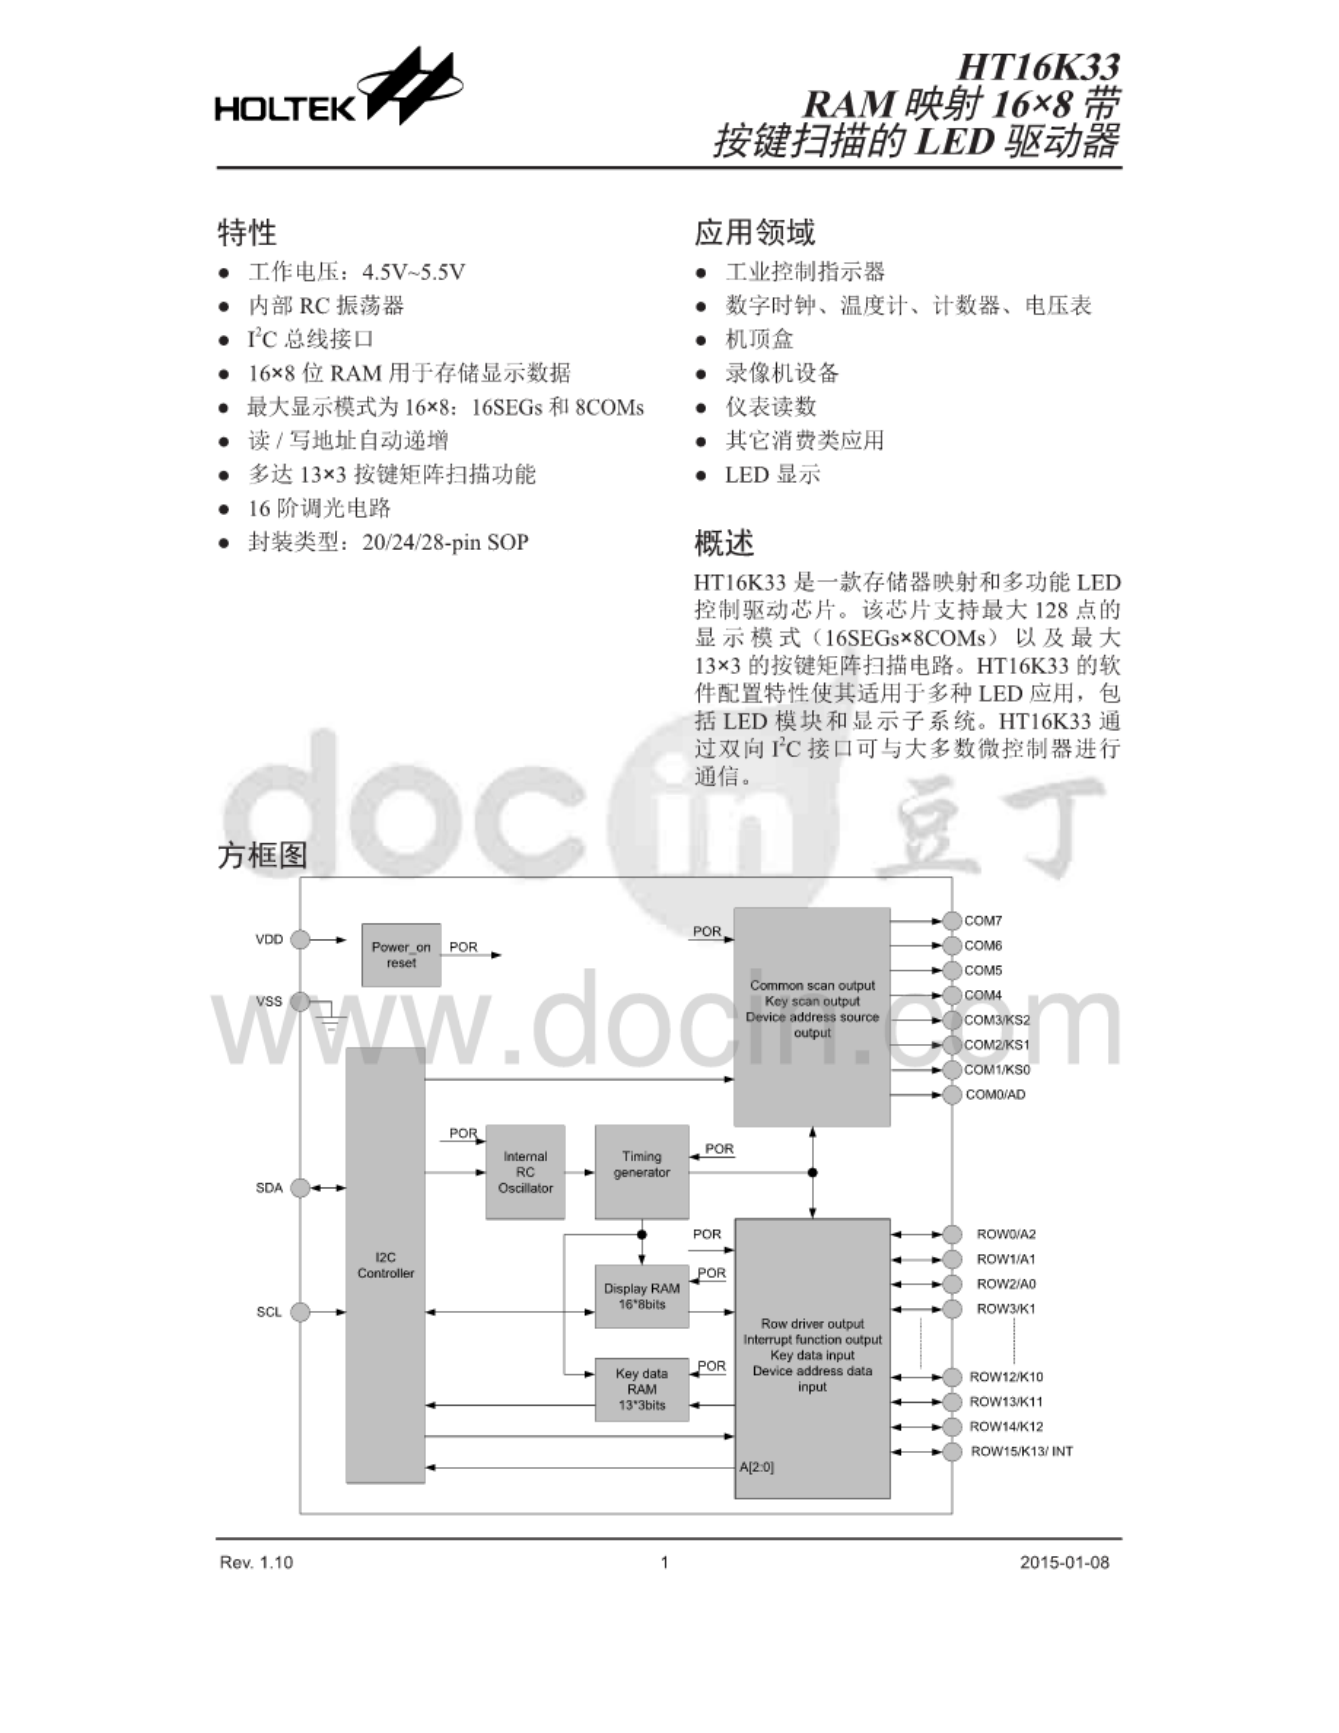 HT16K33-16*8LED点阵屏驱动，完美中文版说明书-非翻译版.pdf